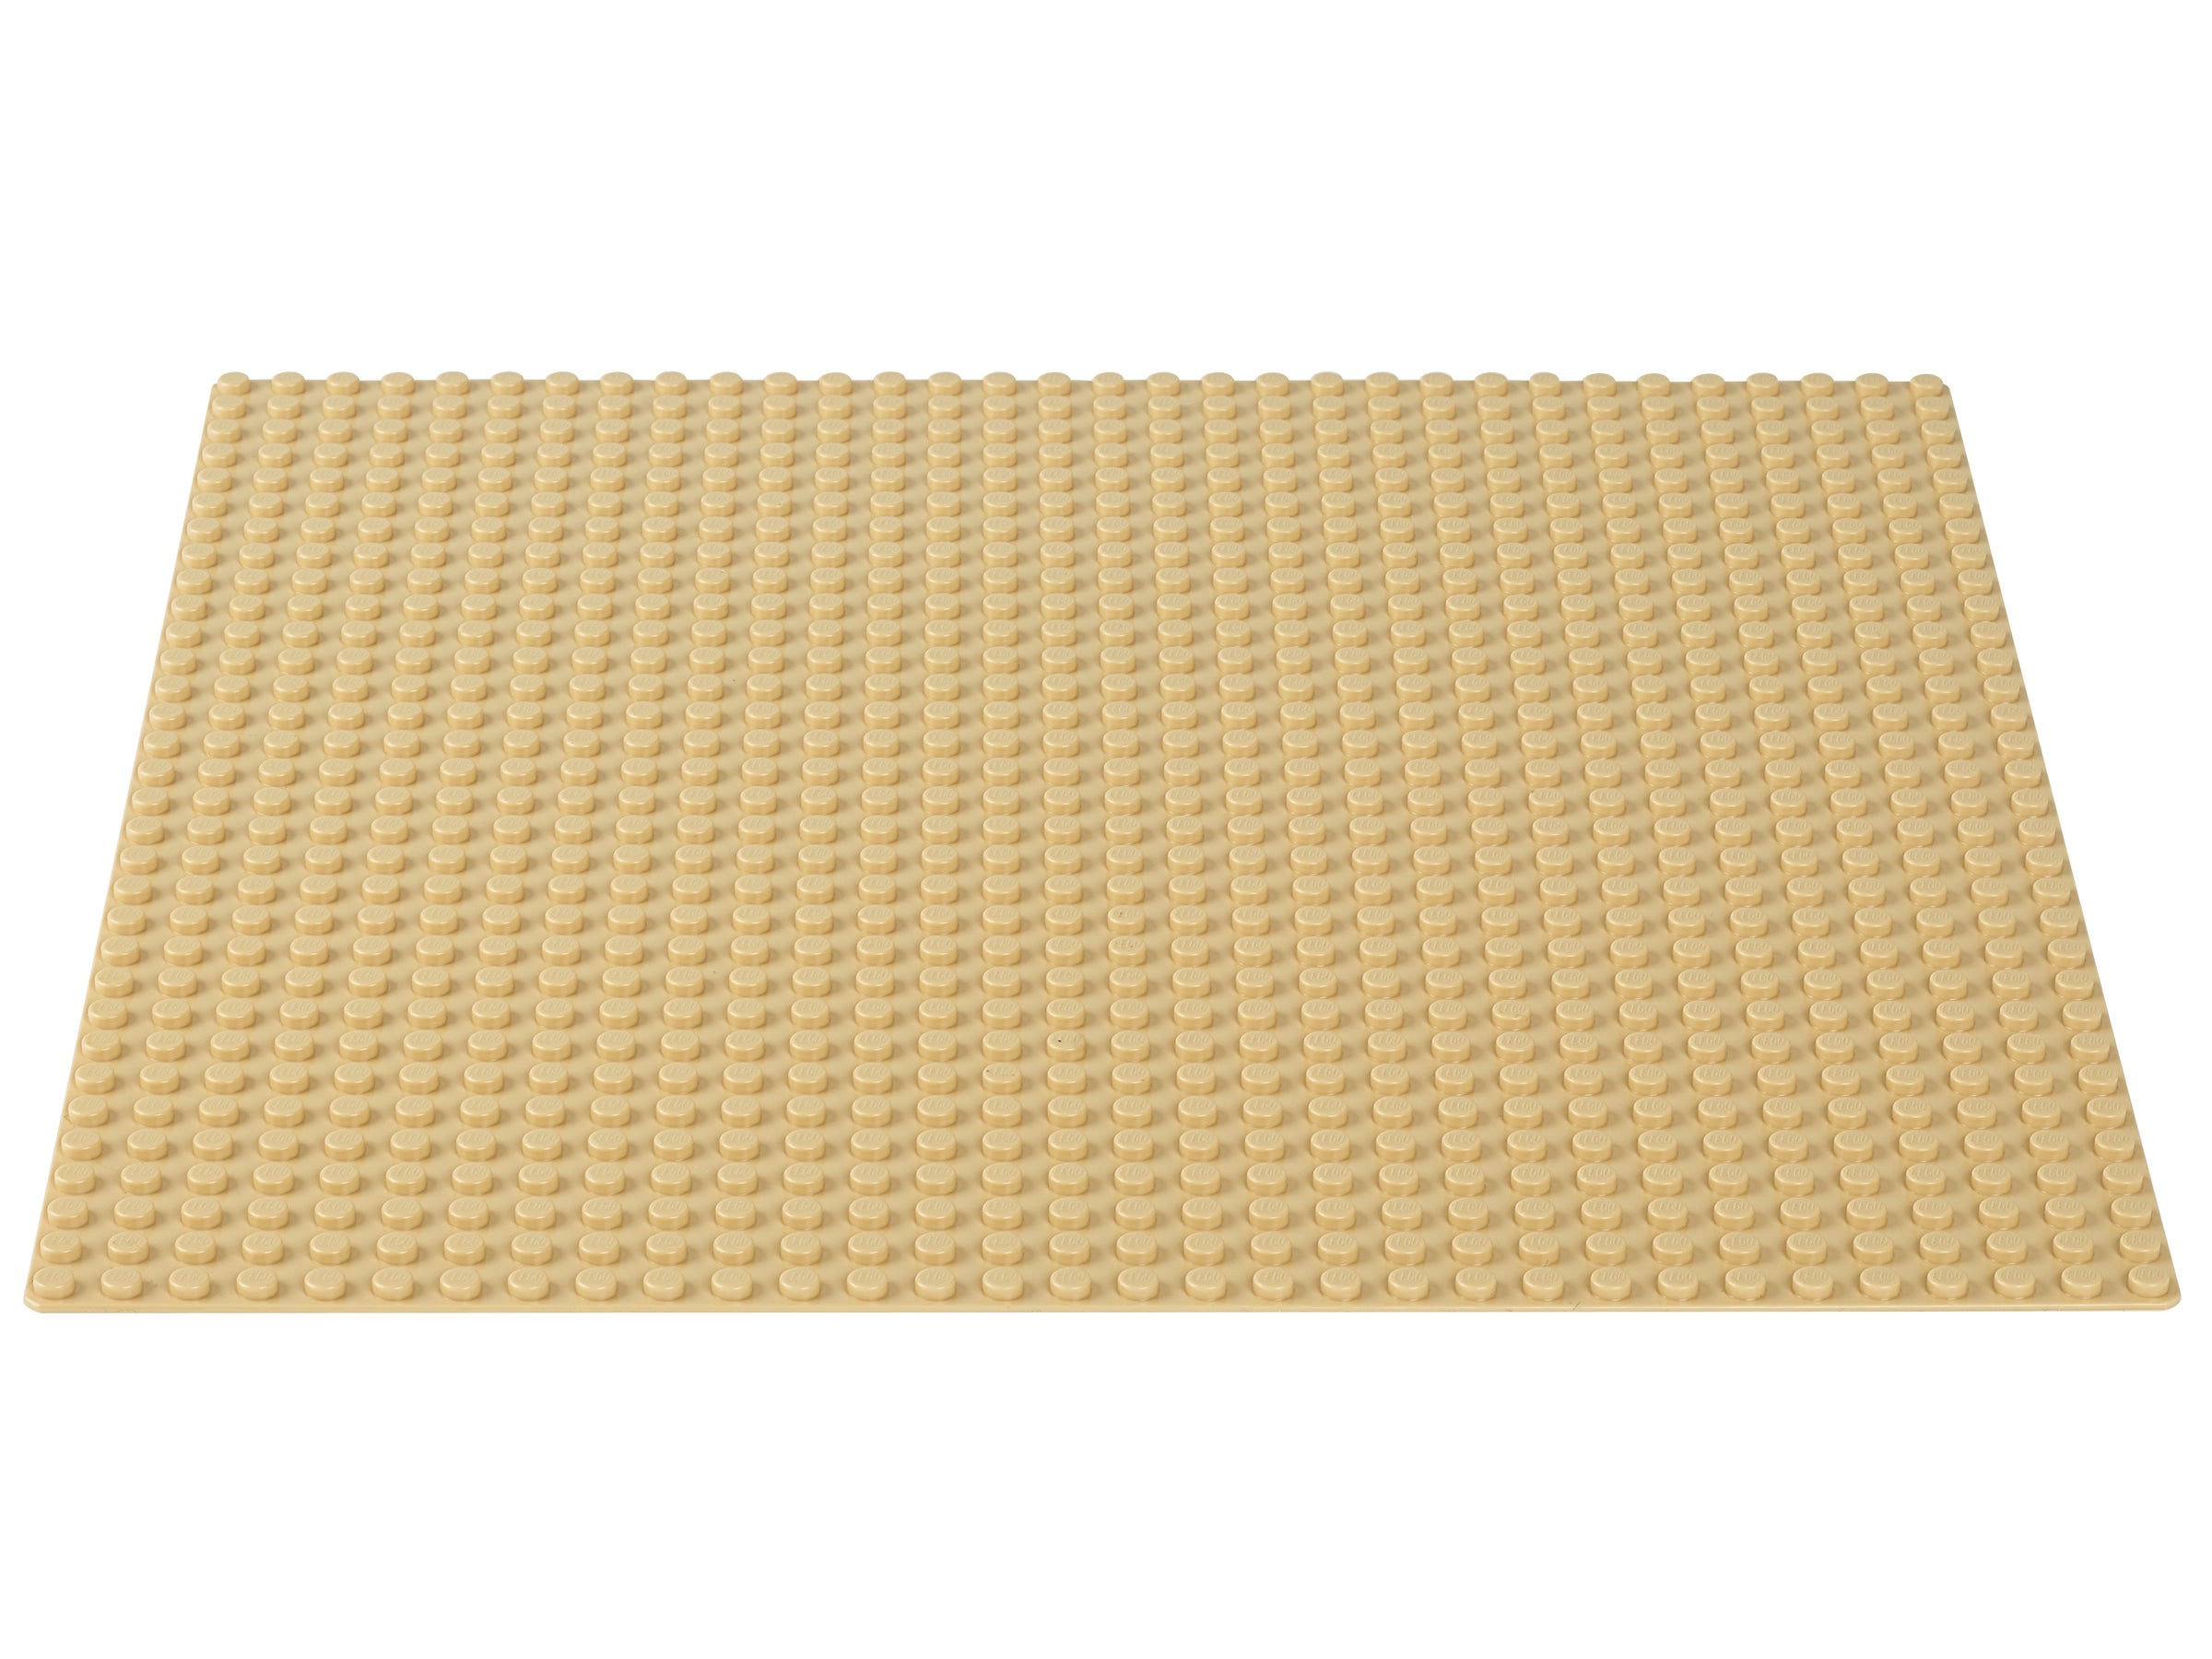 Lego 32x16 tenon gris foncé plaque de base 2748 4269651 NEUF